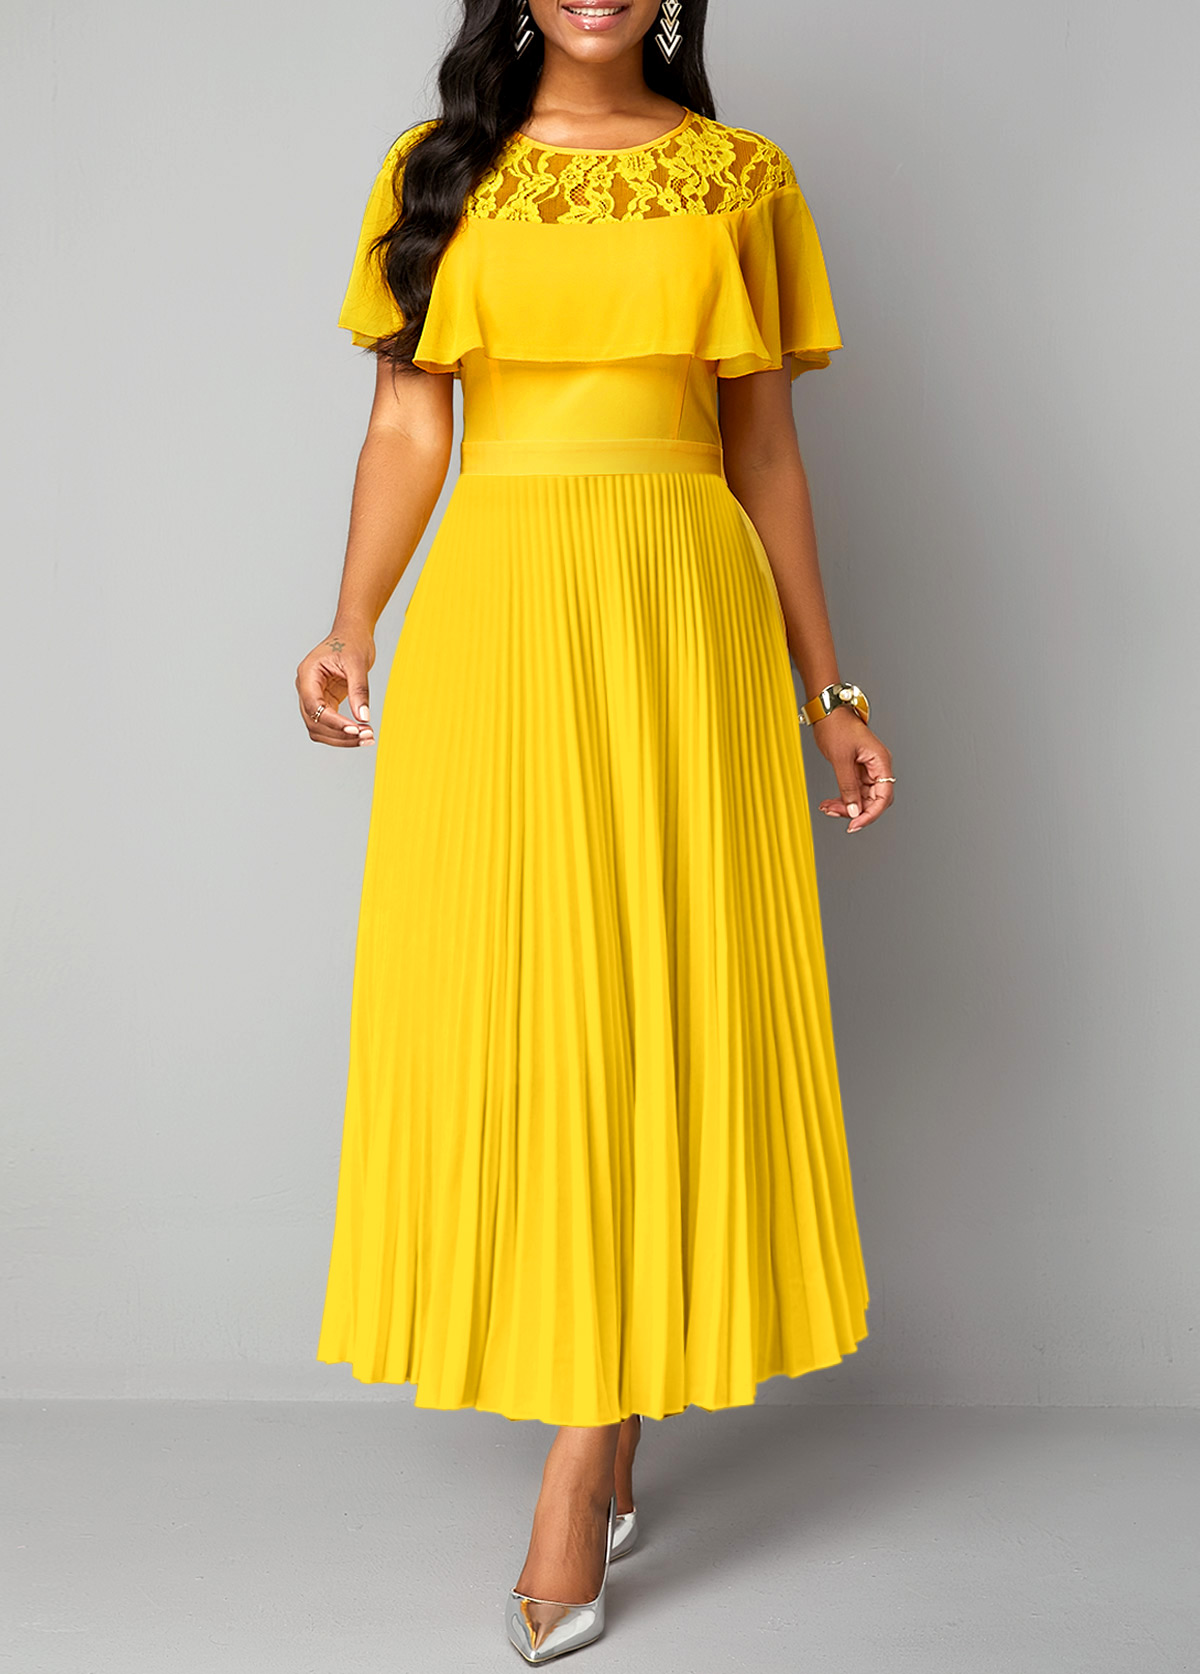 ROTITA Lace Yellow Round Neck Short Sleeve Maxi Dress